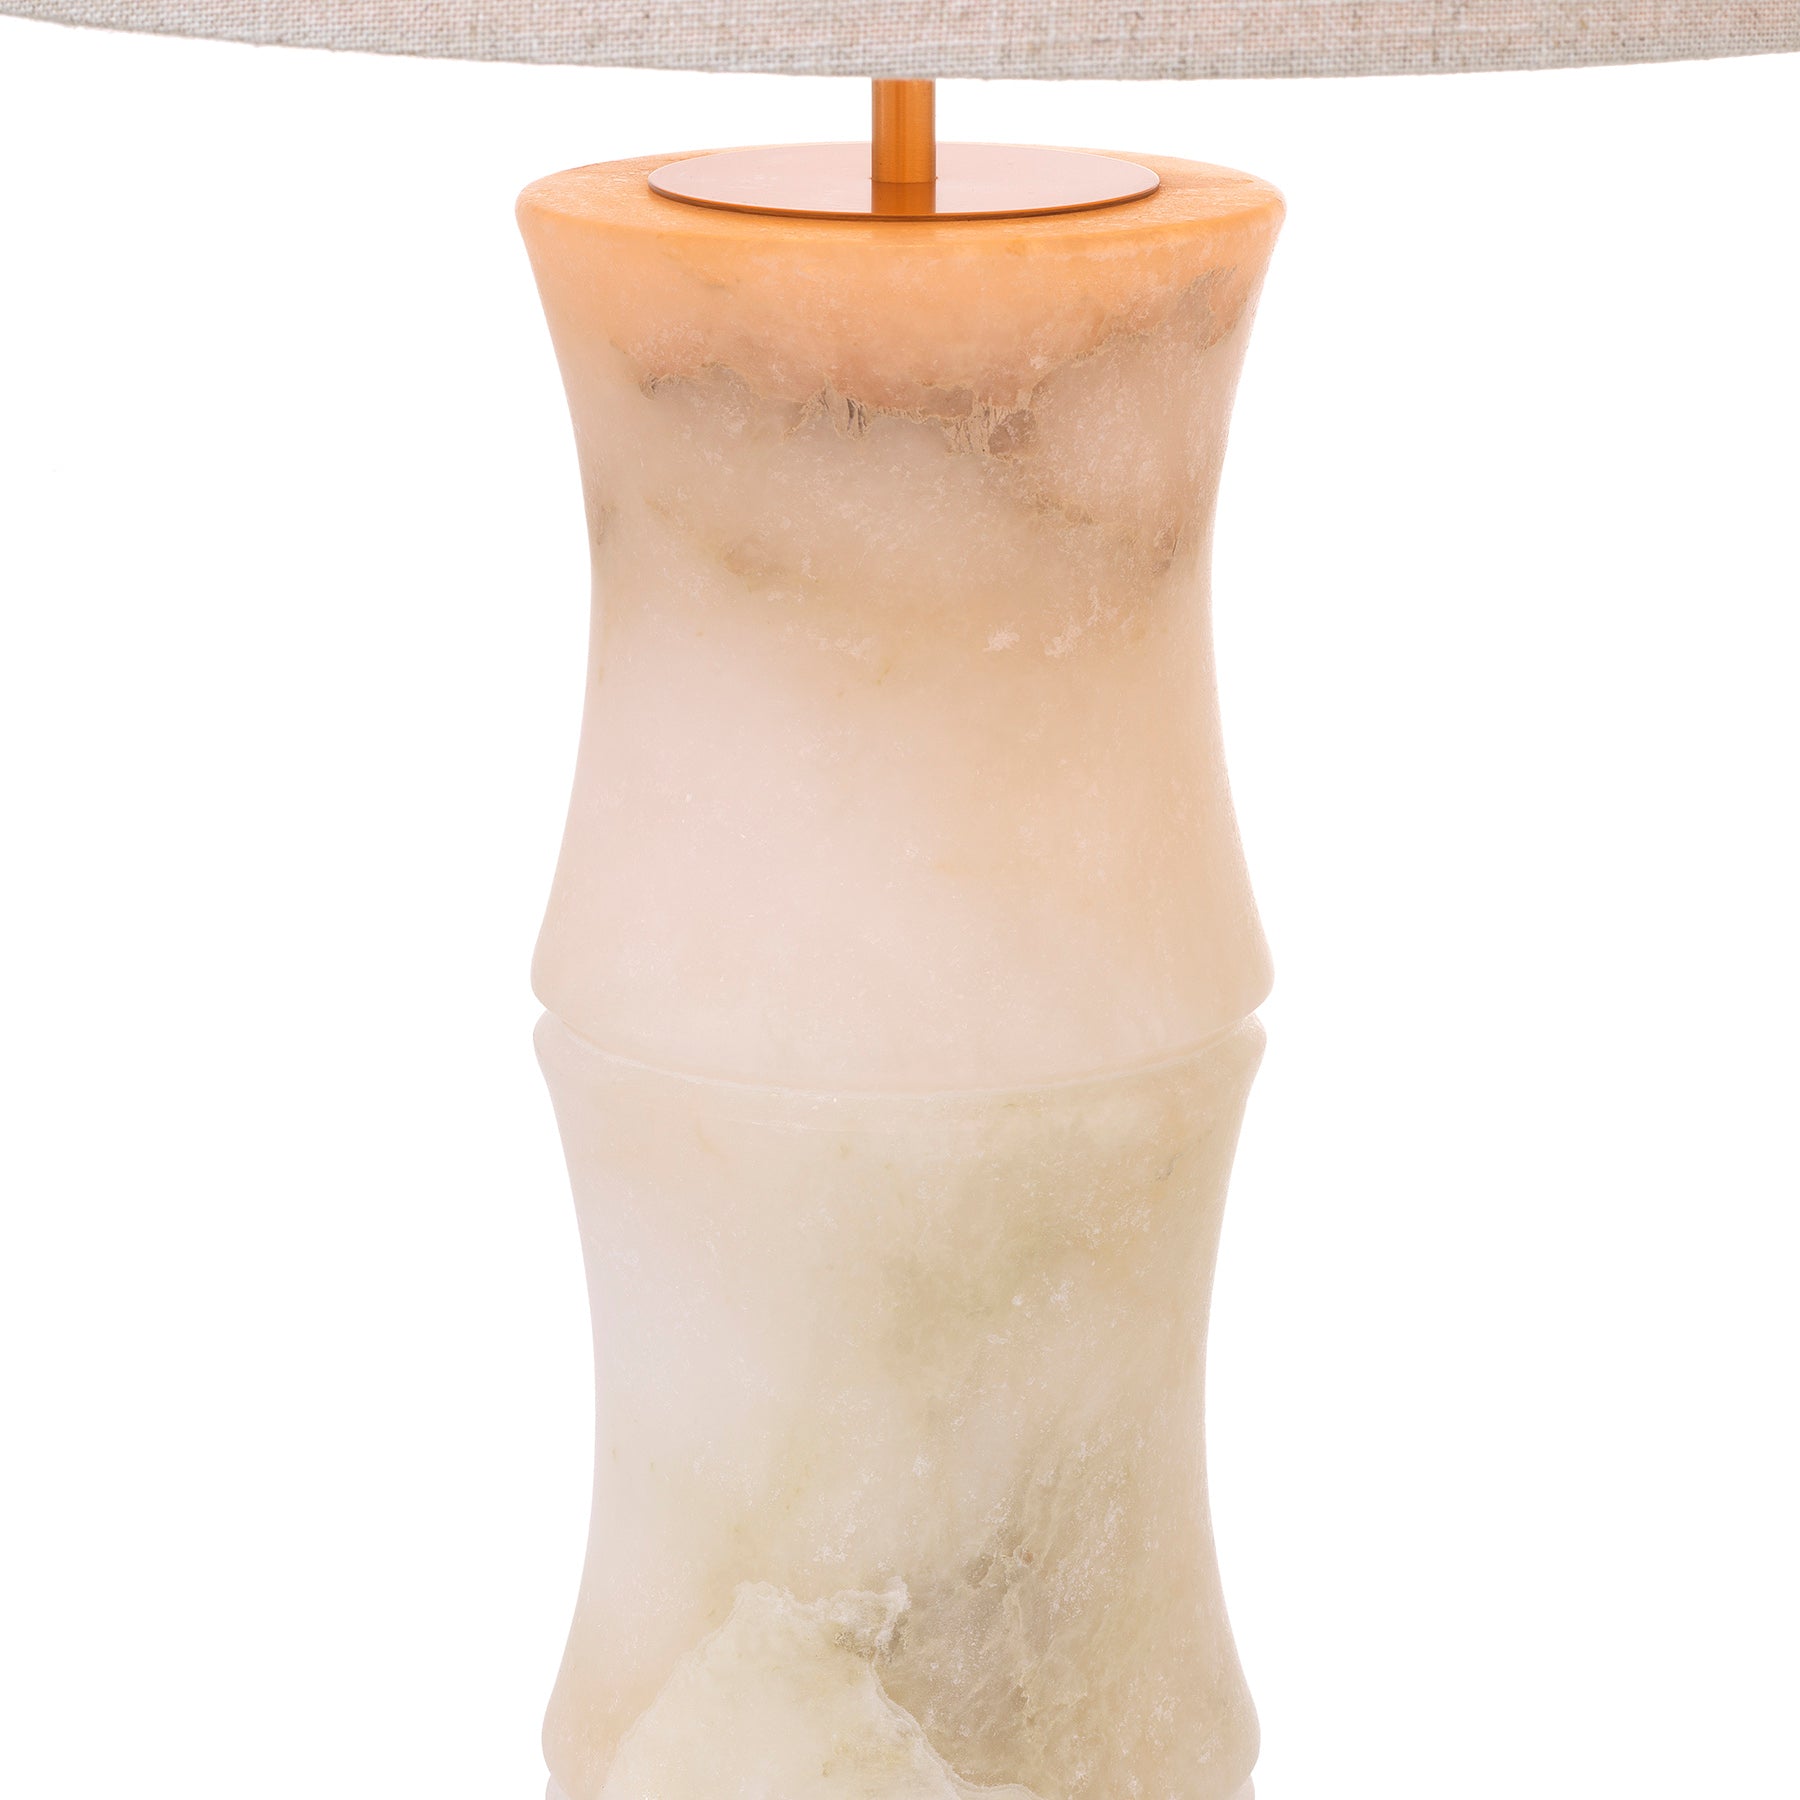 BONNY - Table Lamp